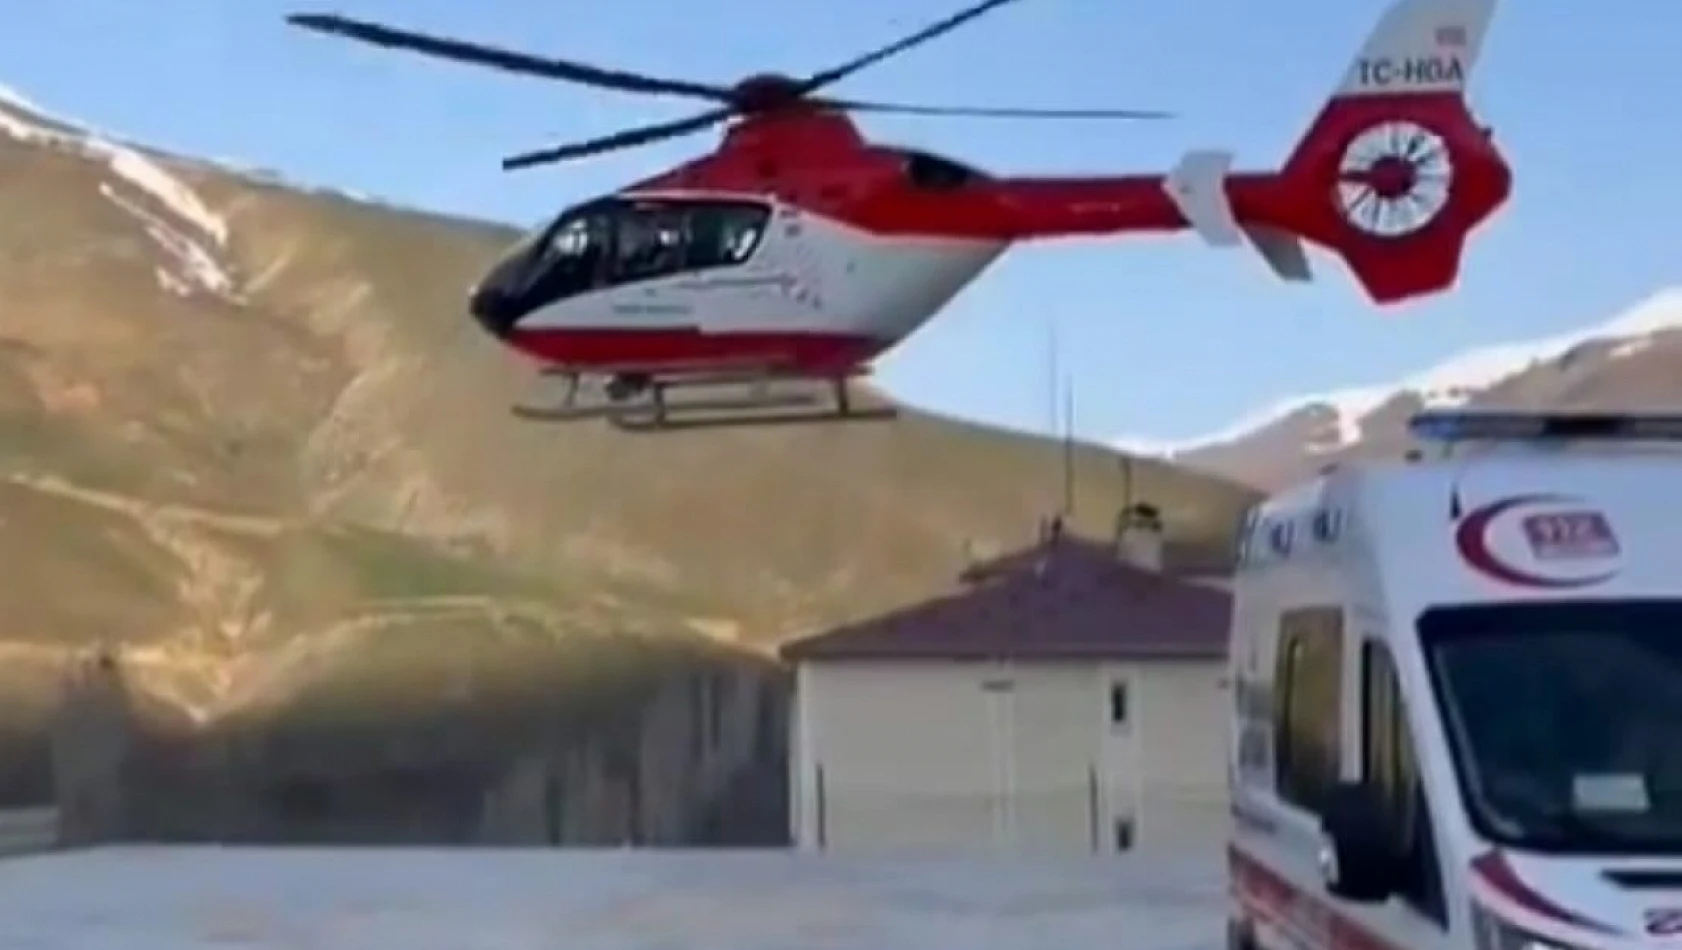 Karayolu kapalı olunca imdada helikopter ambulans koştu!